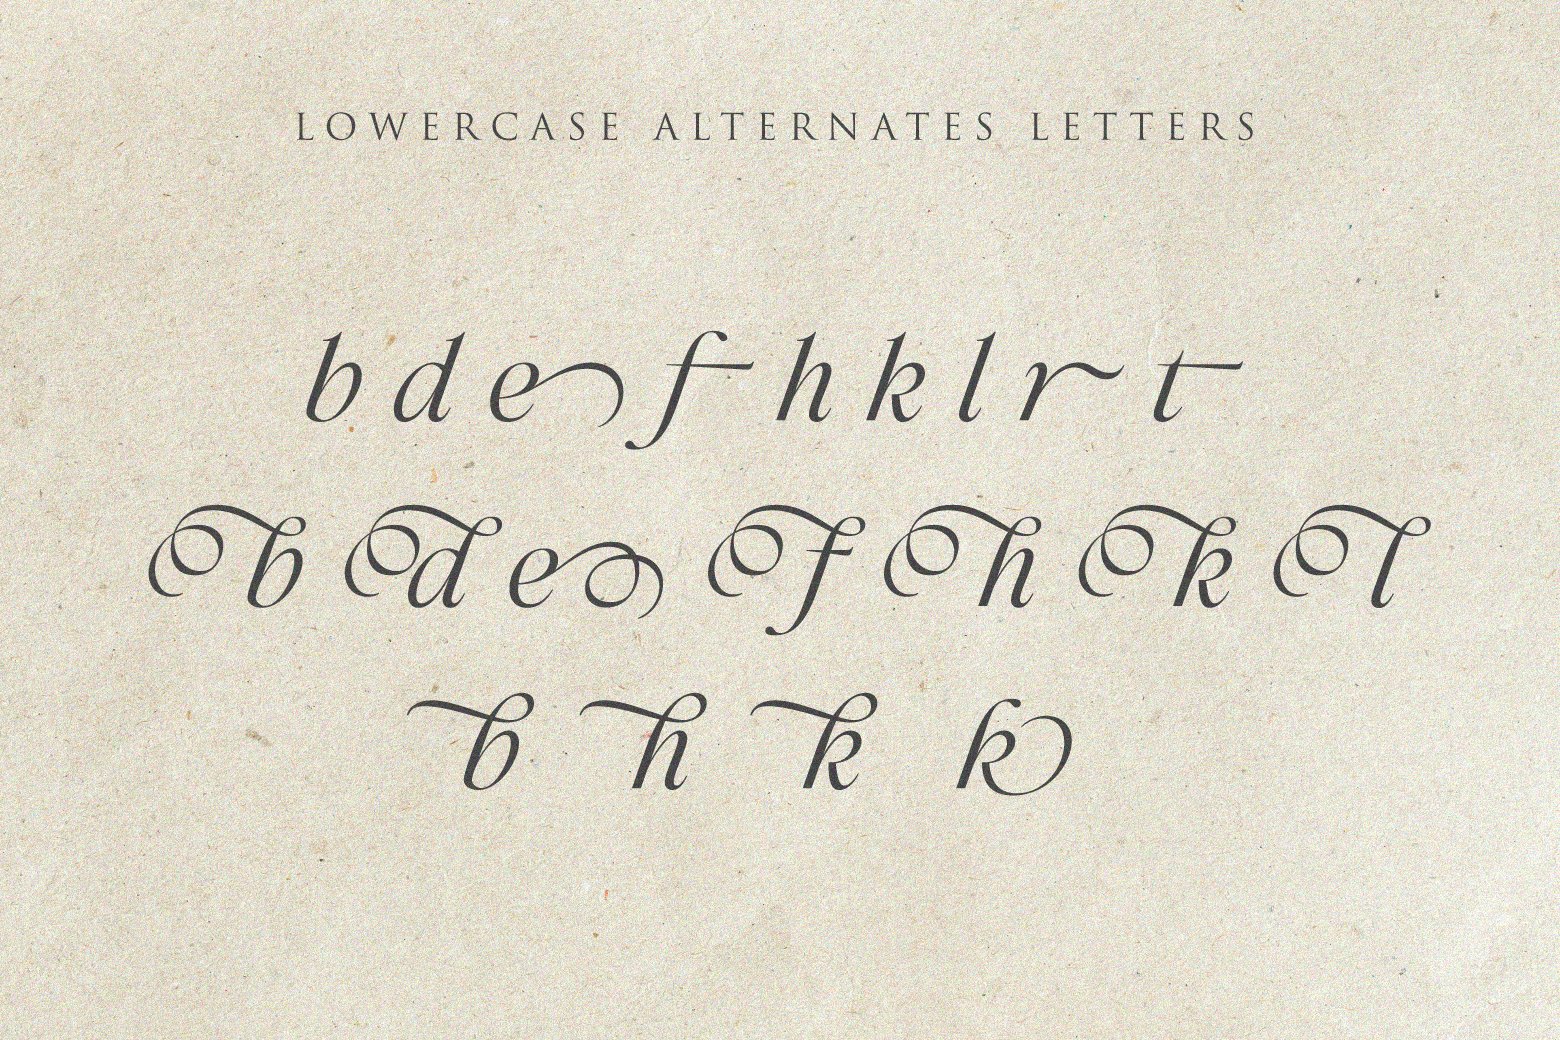 hebrew cursive font for word